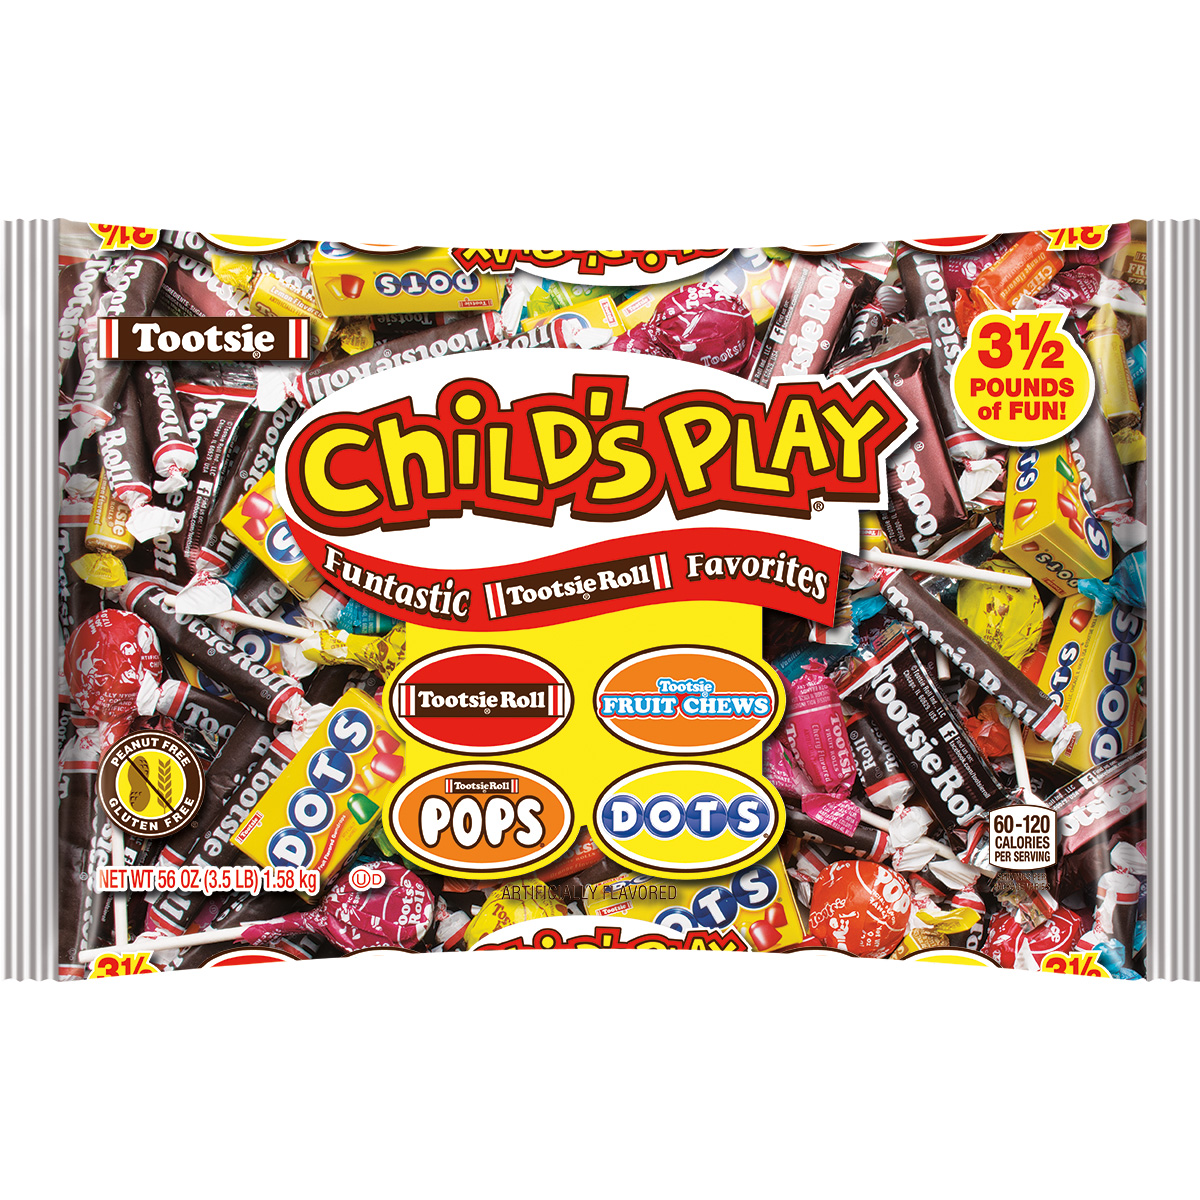 Tootsie Child's Play Variety Candies Pack, 3.5 Ib - image 1 of 10